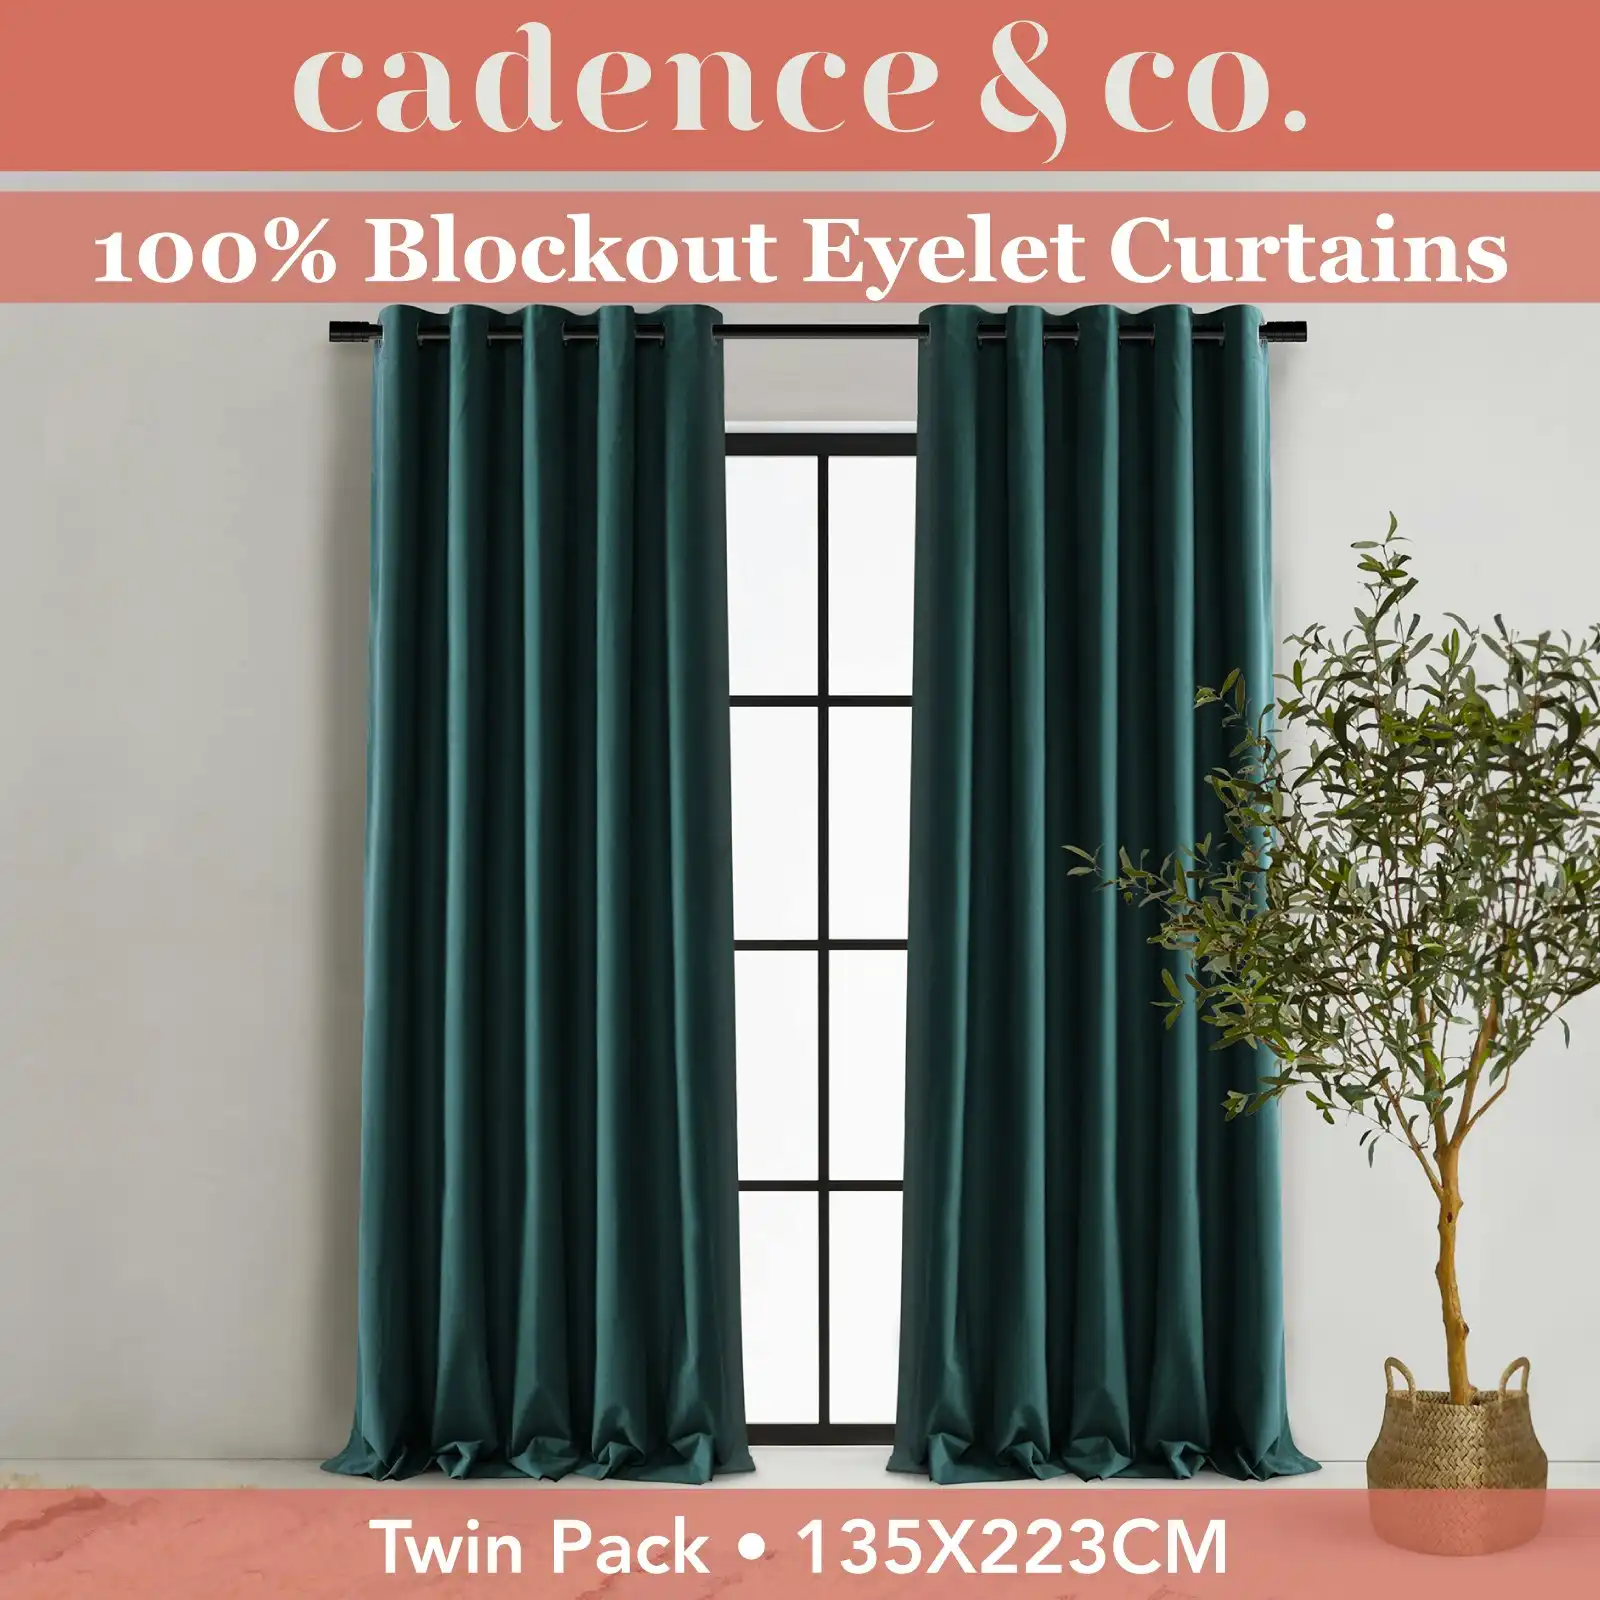 Cadence & Co. Byron Matte Velvet 100% Blockout Eyelet Curtains Twin Pack Deep Teal 135x223cm